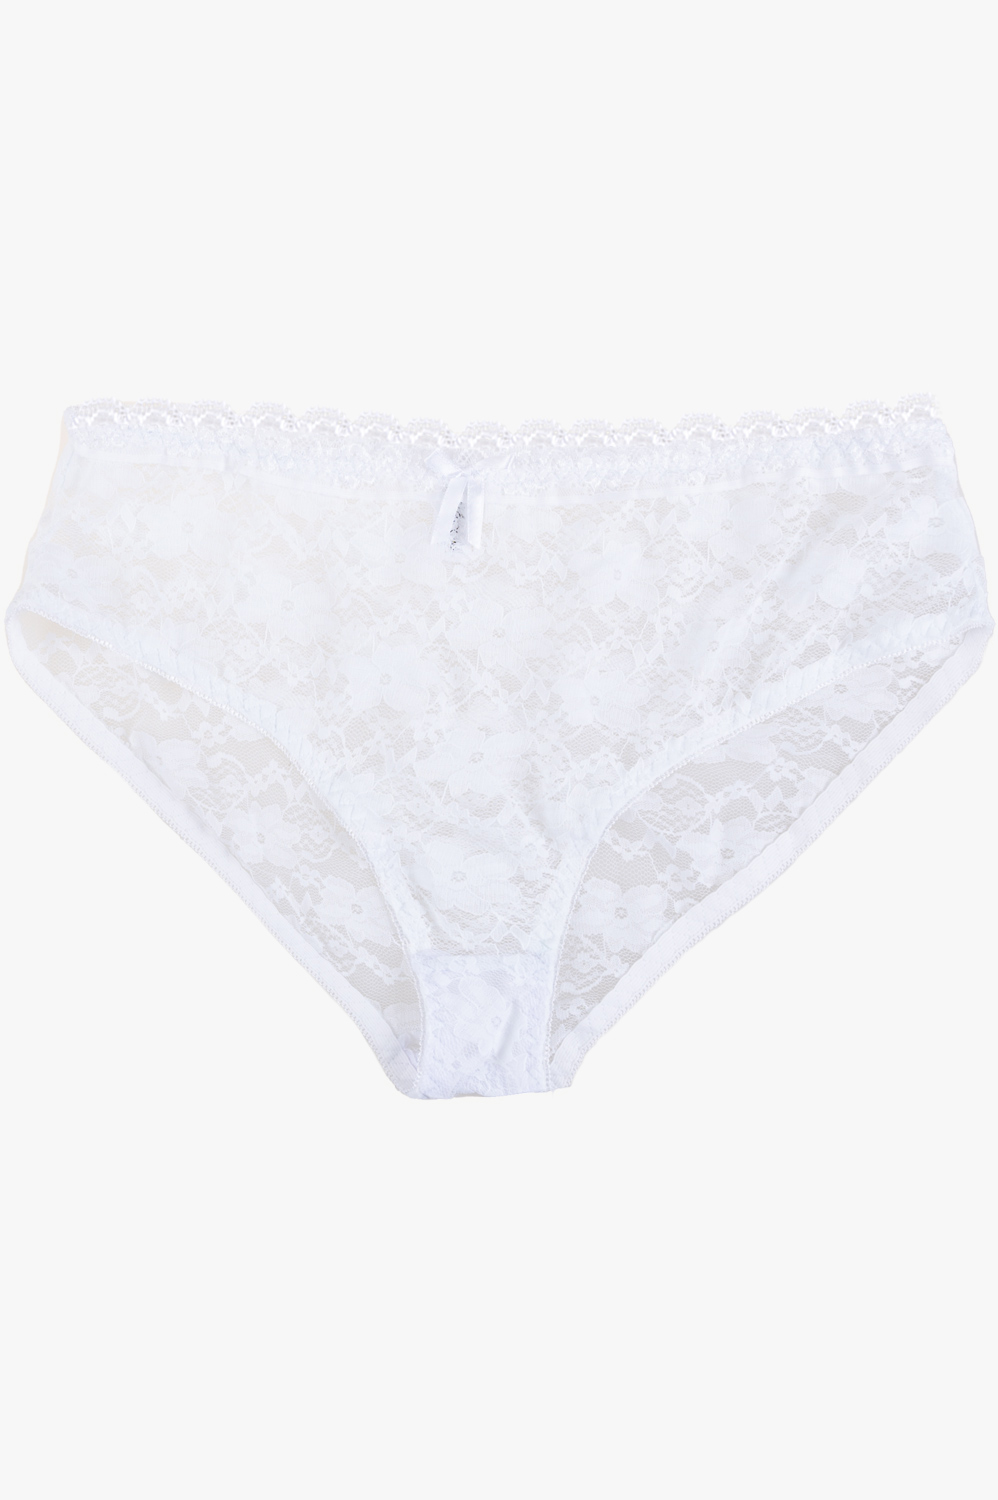 Cukoo White Lace Full Coverage Bra & Panty Set